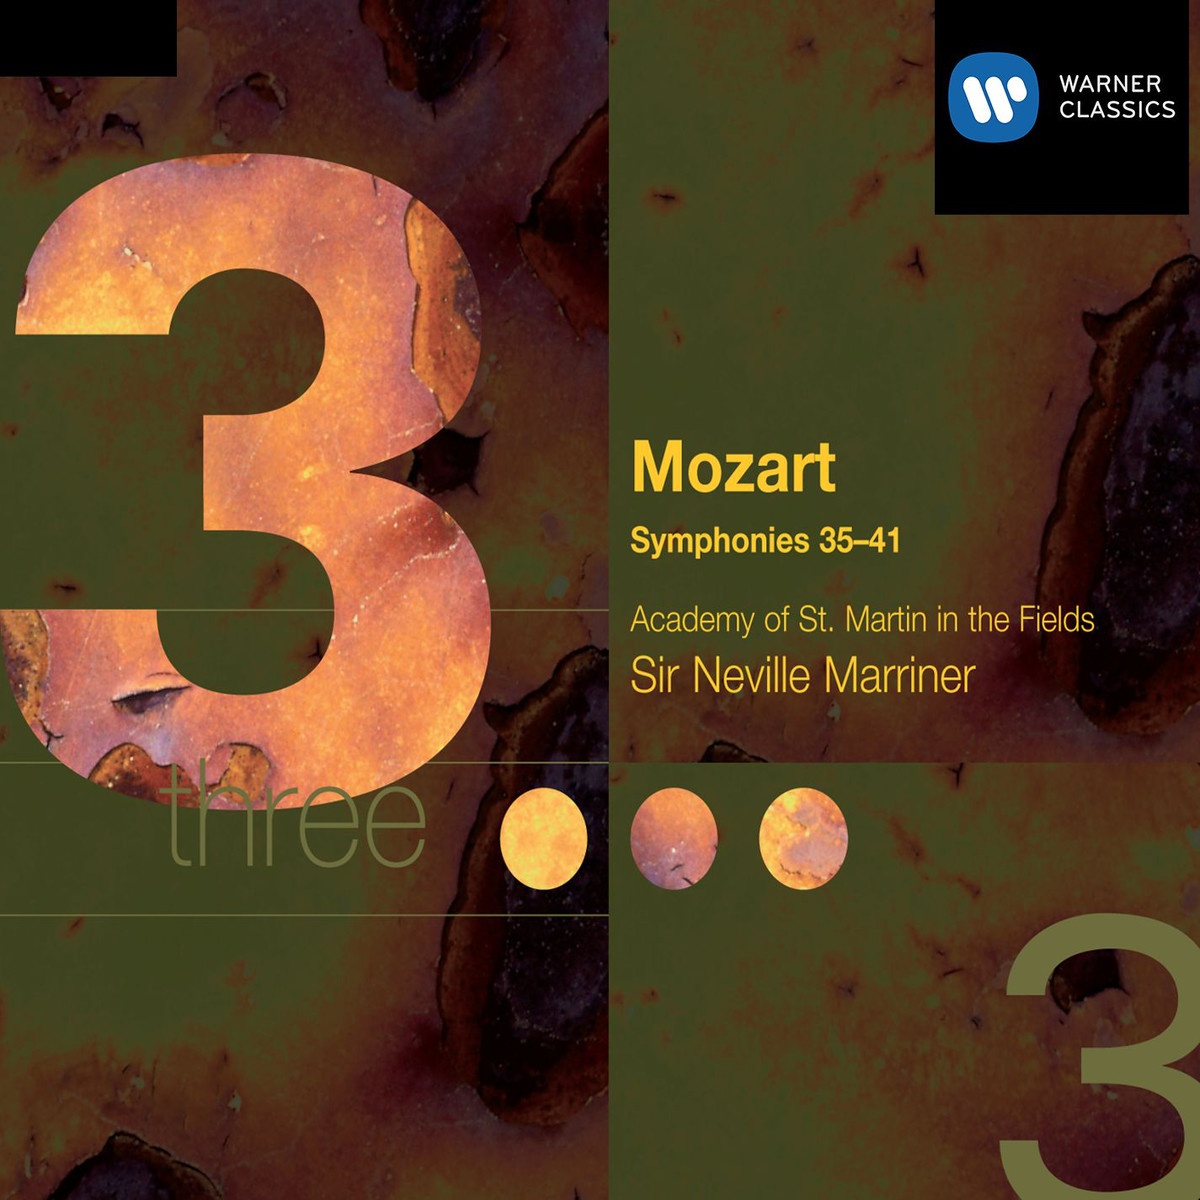 Symphony No. 36 in C, K.425 'Linz': IV. Finale (Presto)